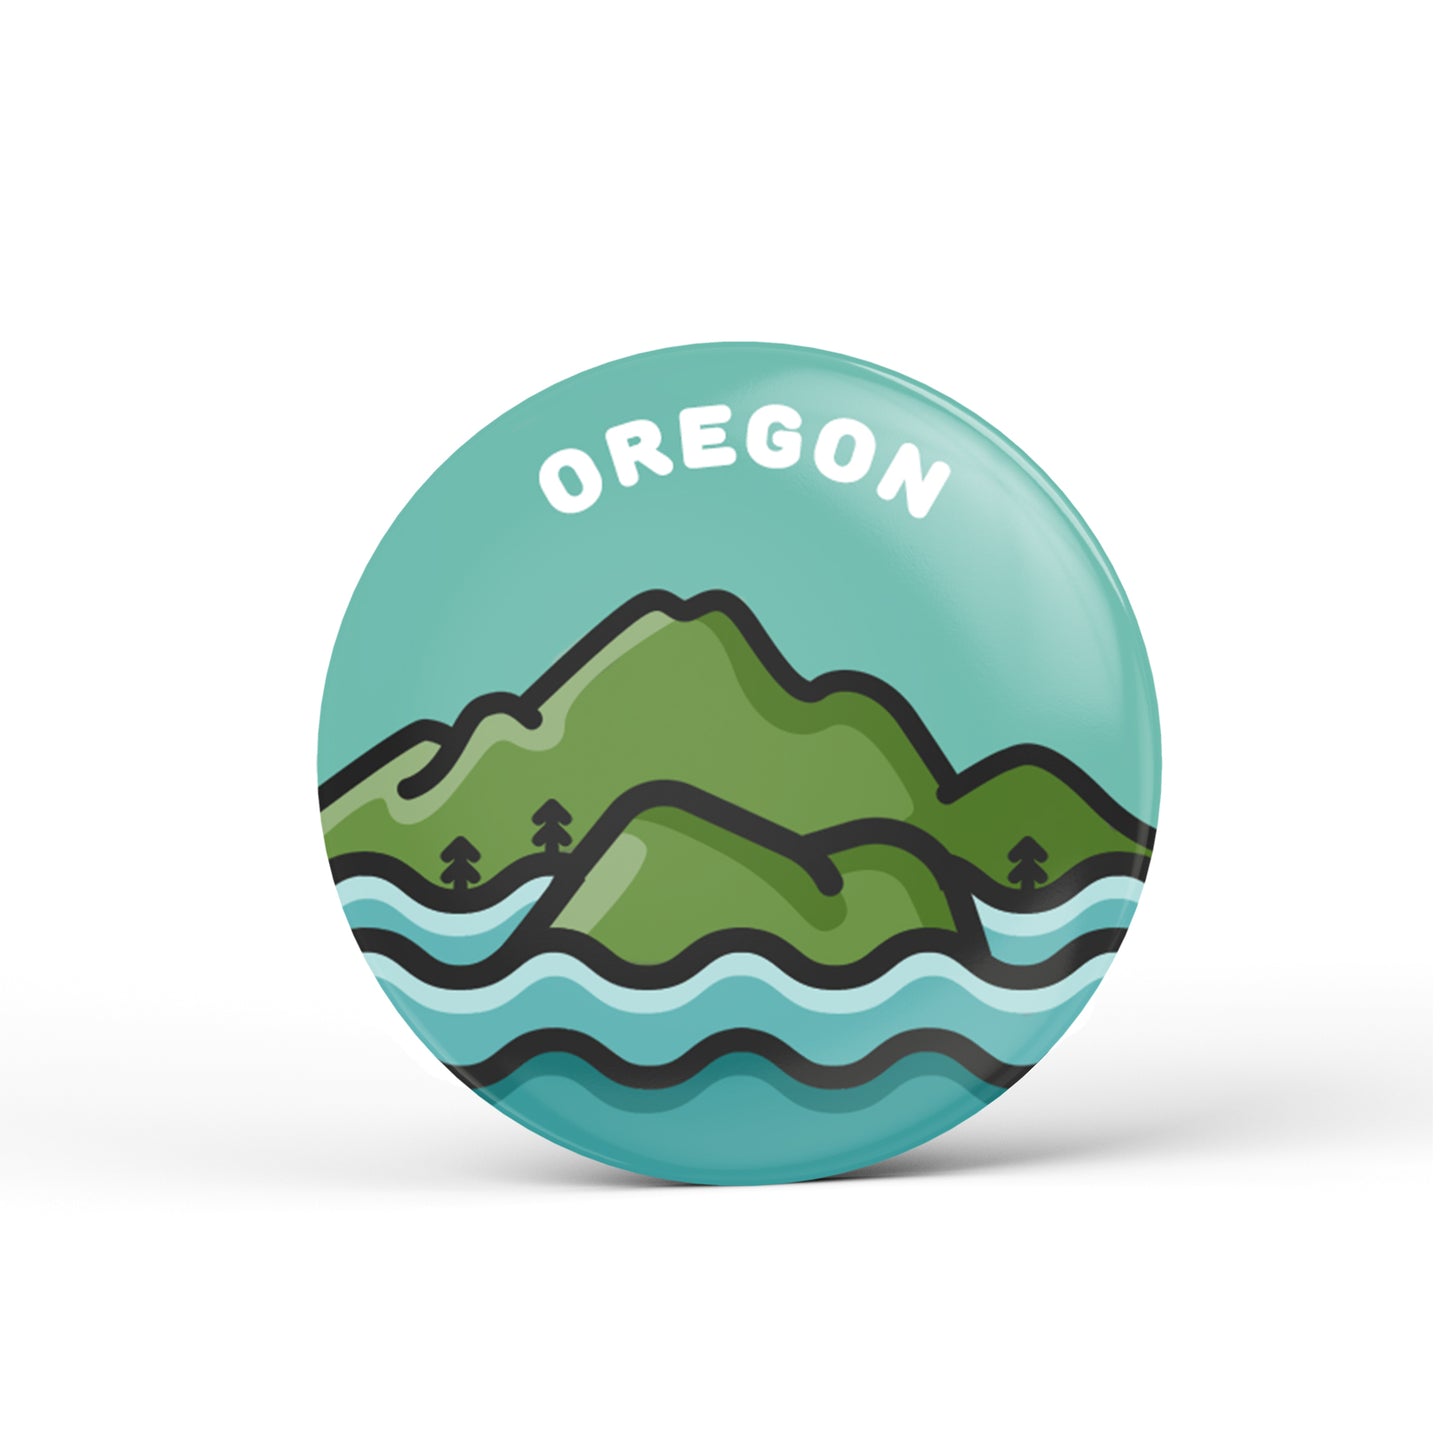 Oregon Button